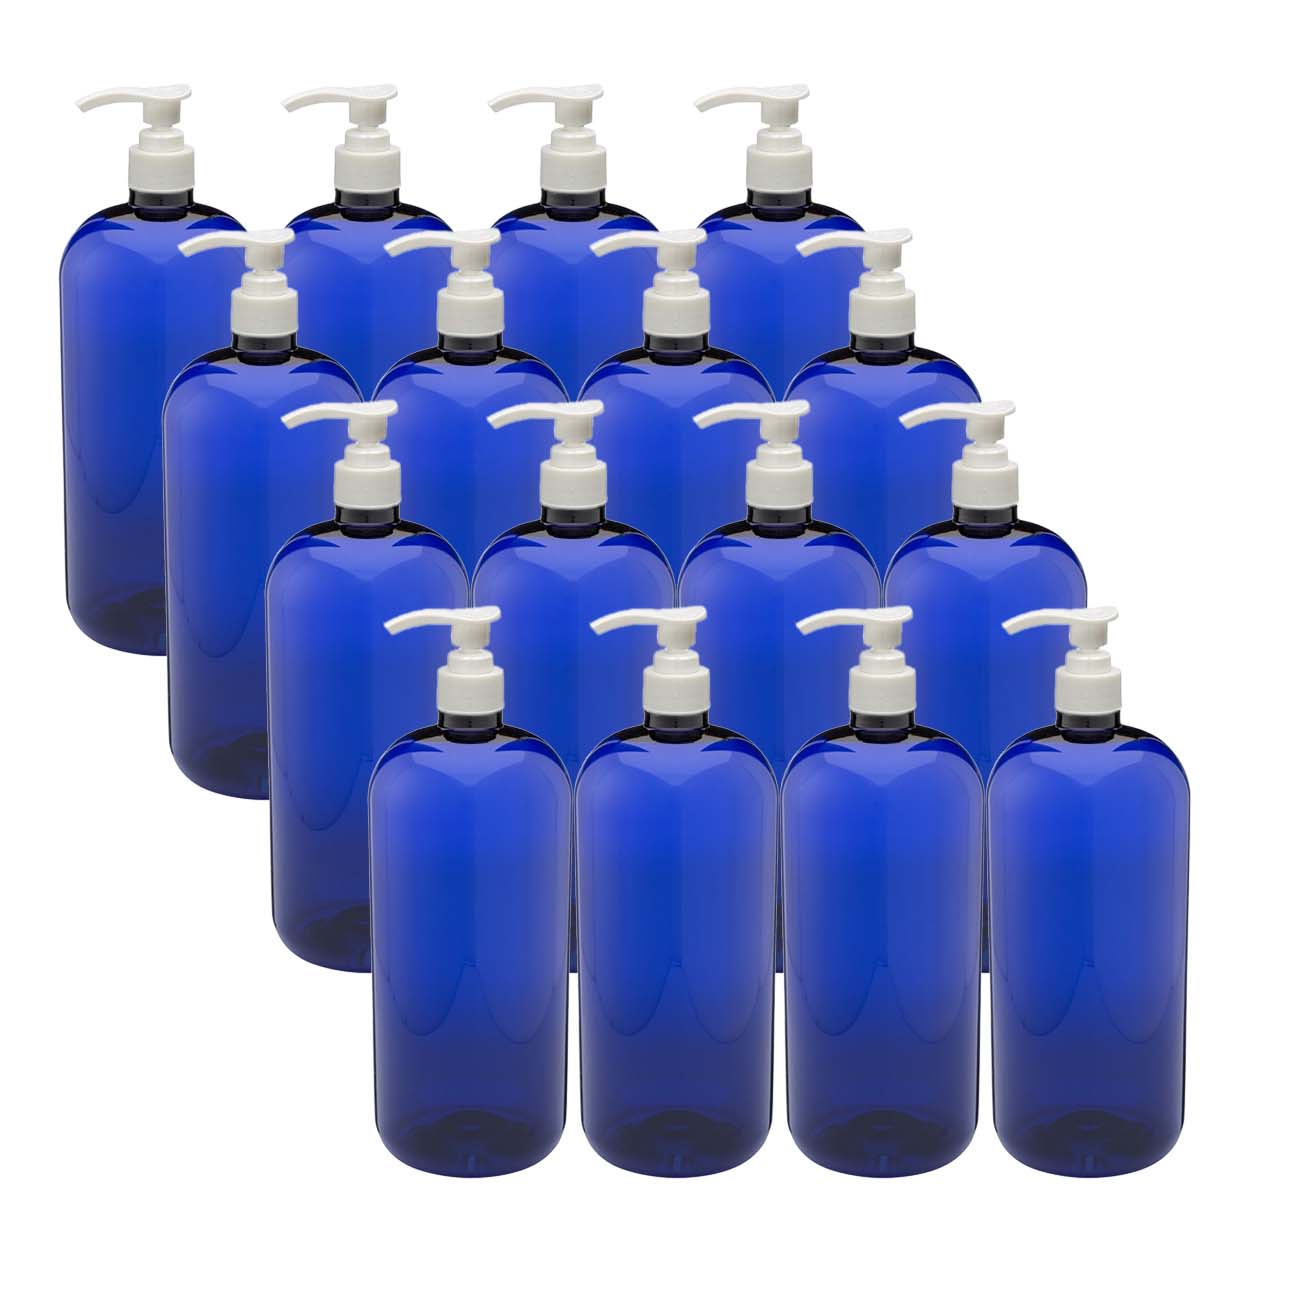 16 ounce cobalt blue containers (16 count PET plastic)